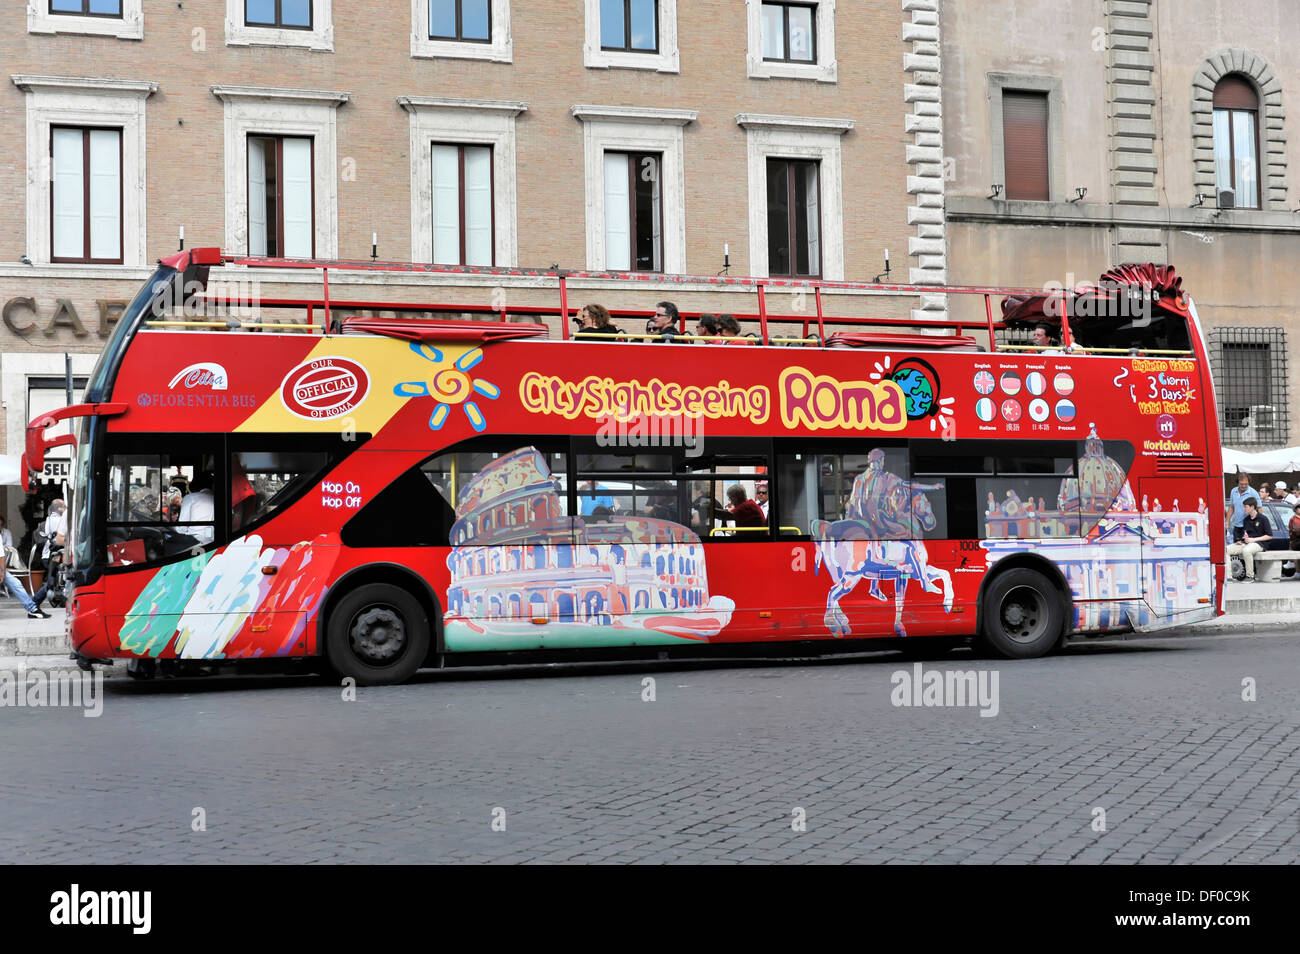 City Sightseeing Roma, sightseeing tour, tourist bus, Rome, Italy, Europe Stock Photo